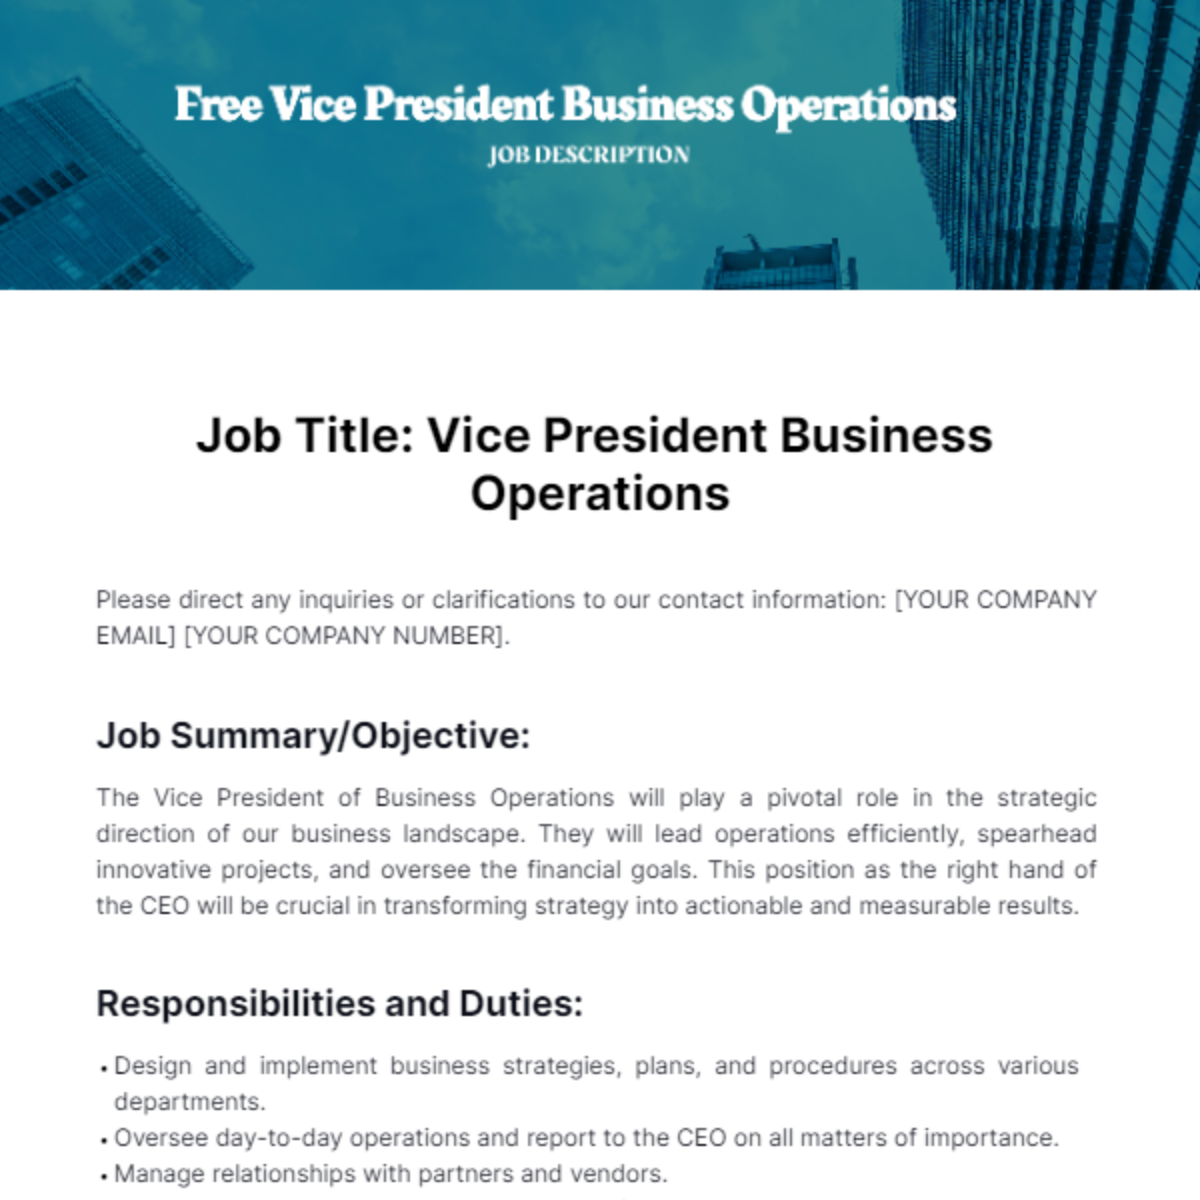 Vice President Business Operations Job Description Template